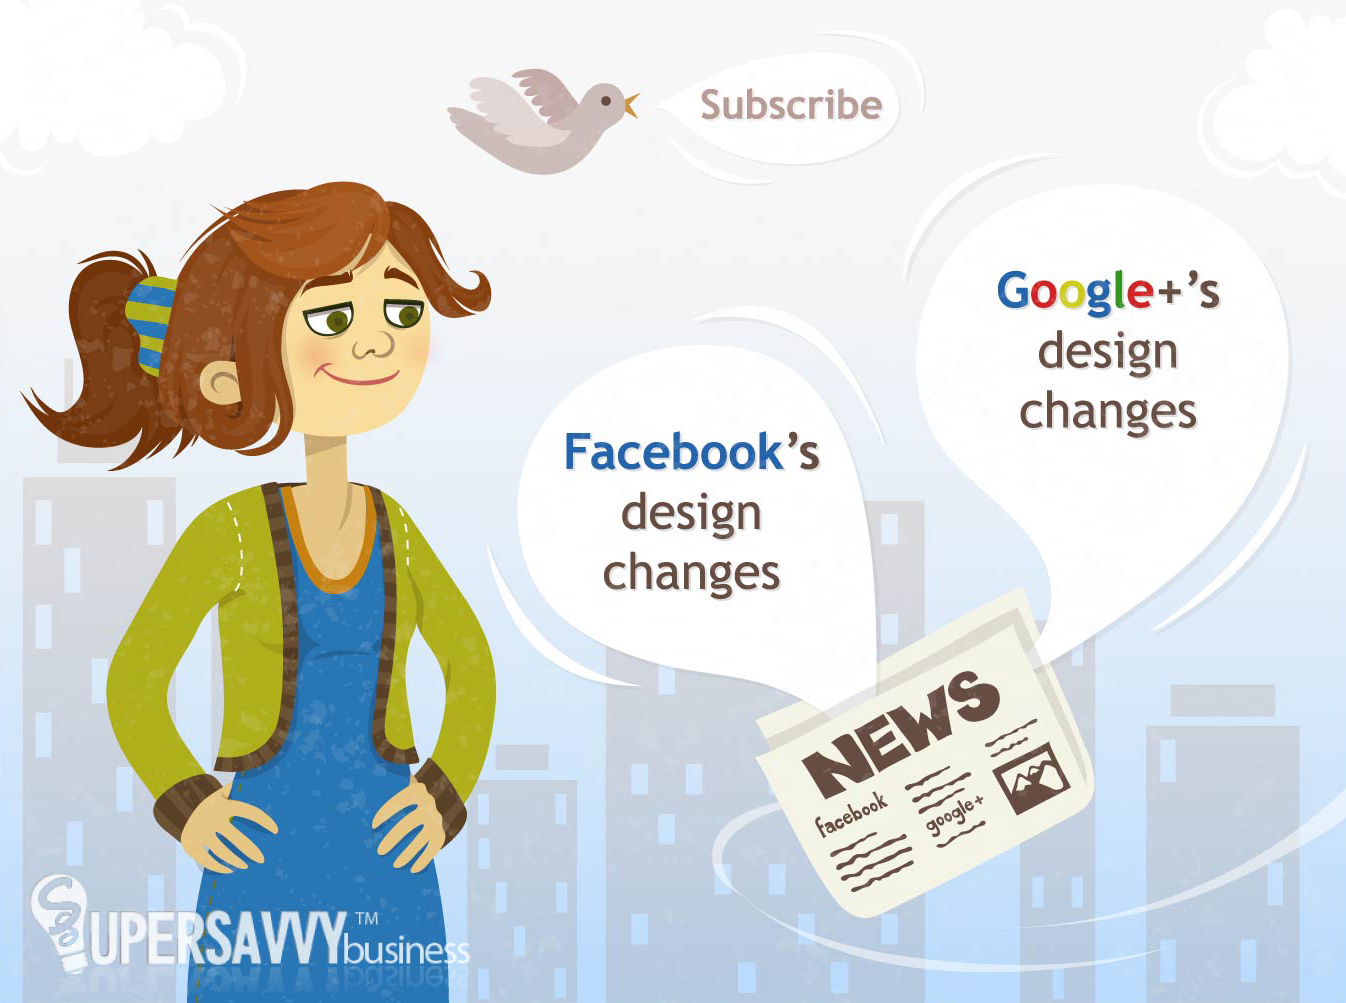 Facebook and Google+ design updates